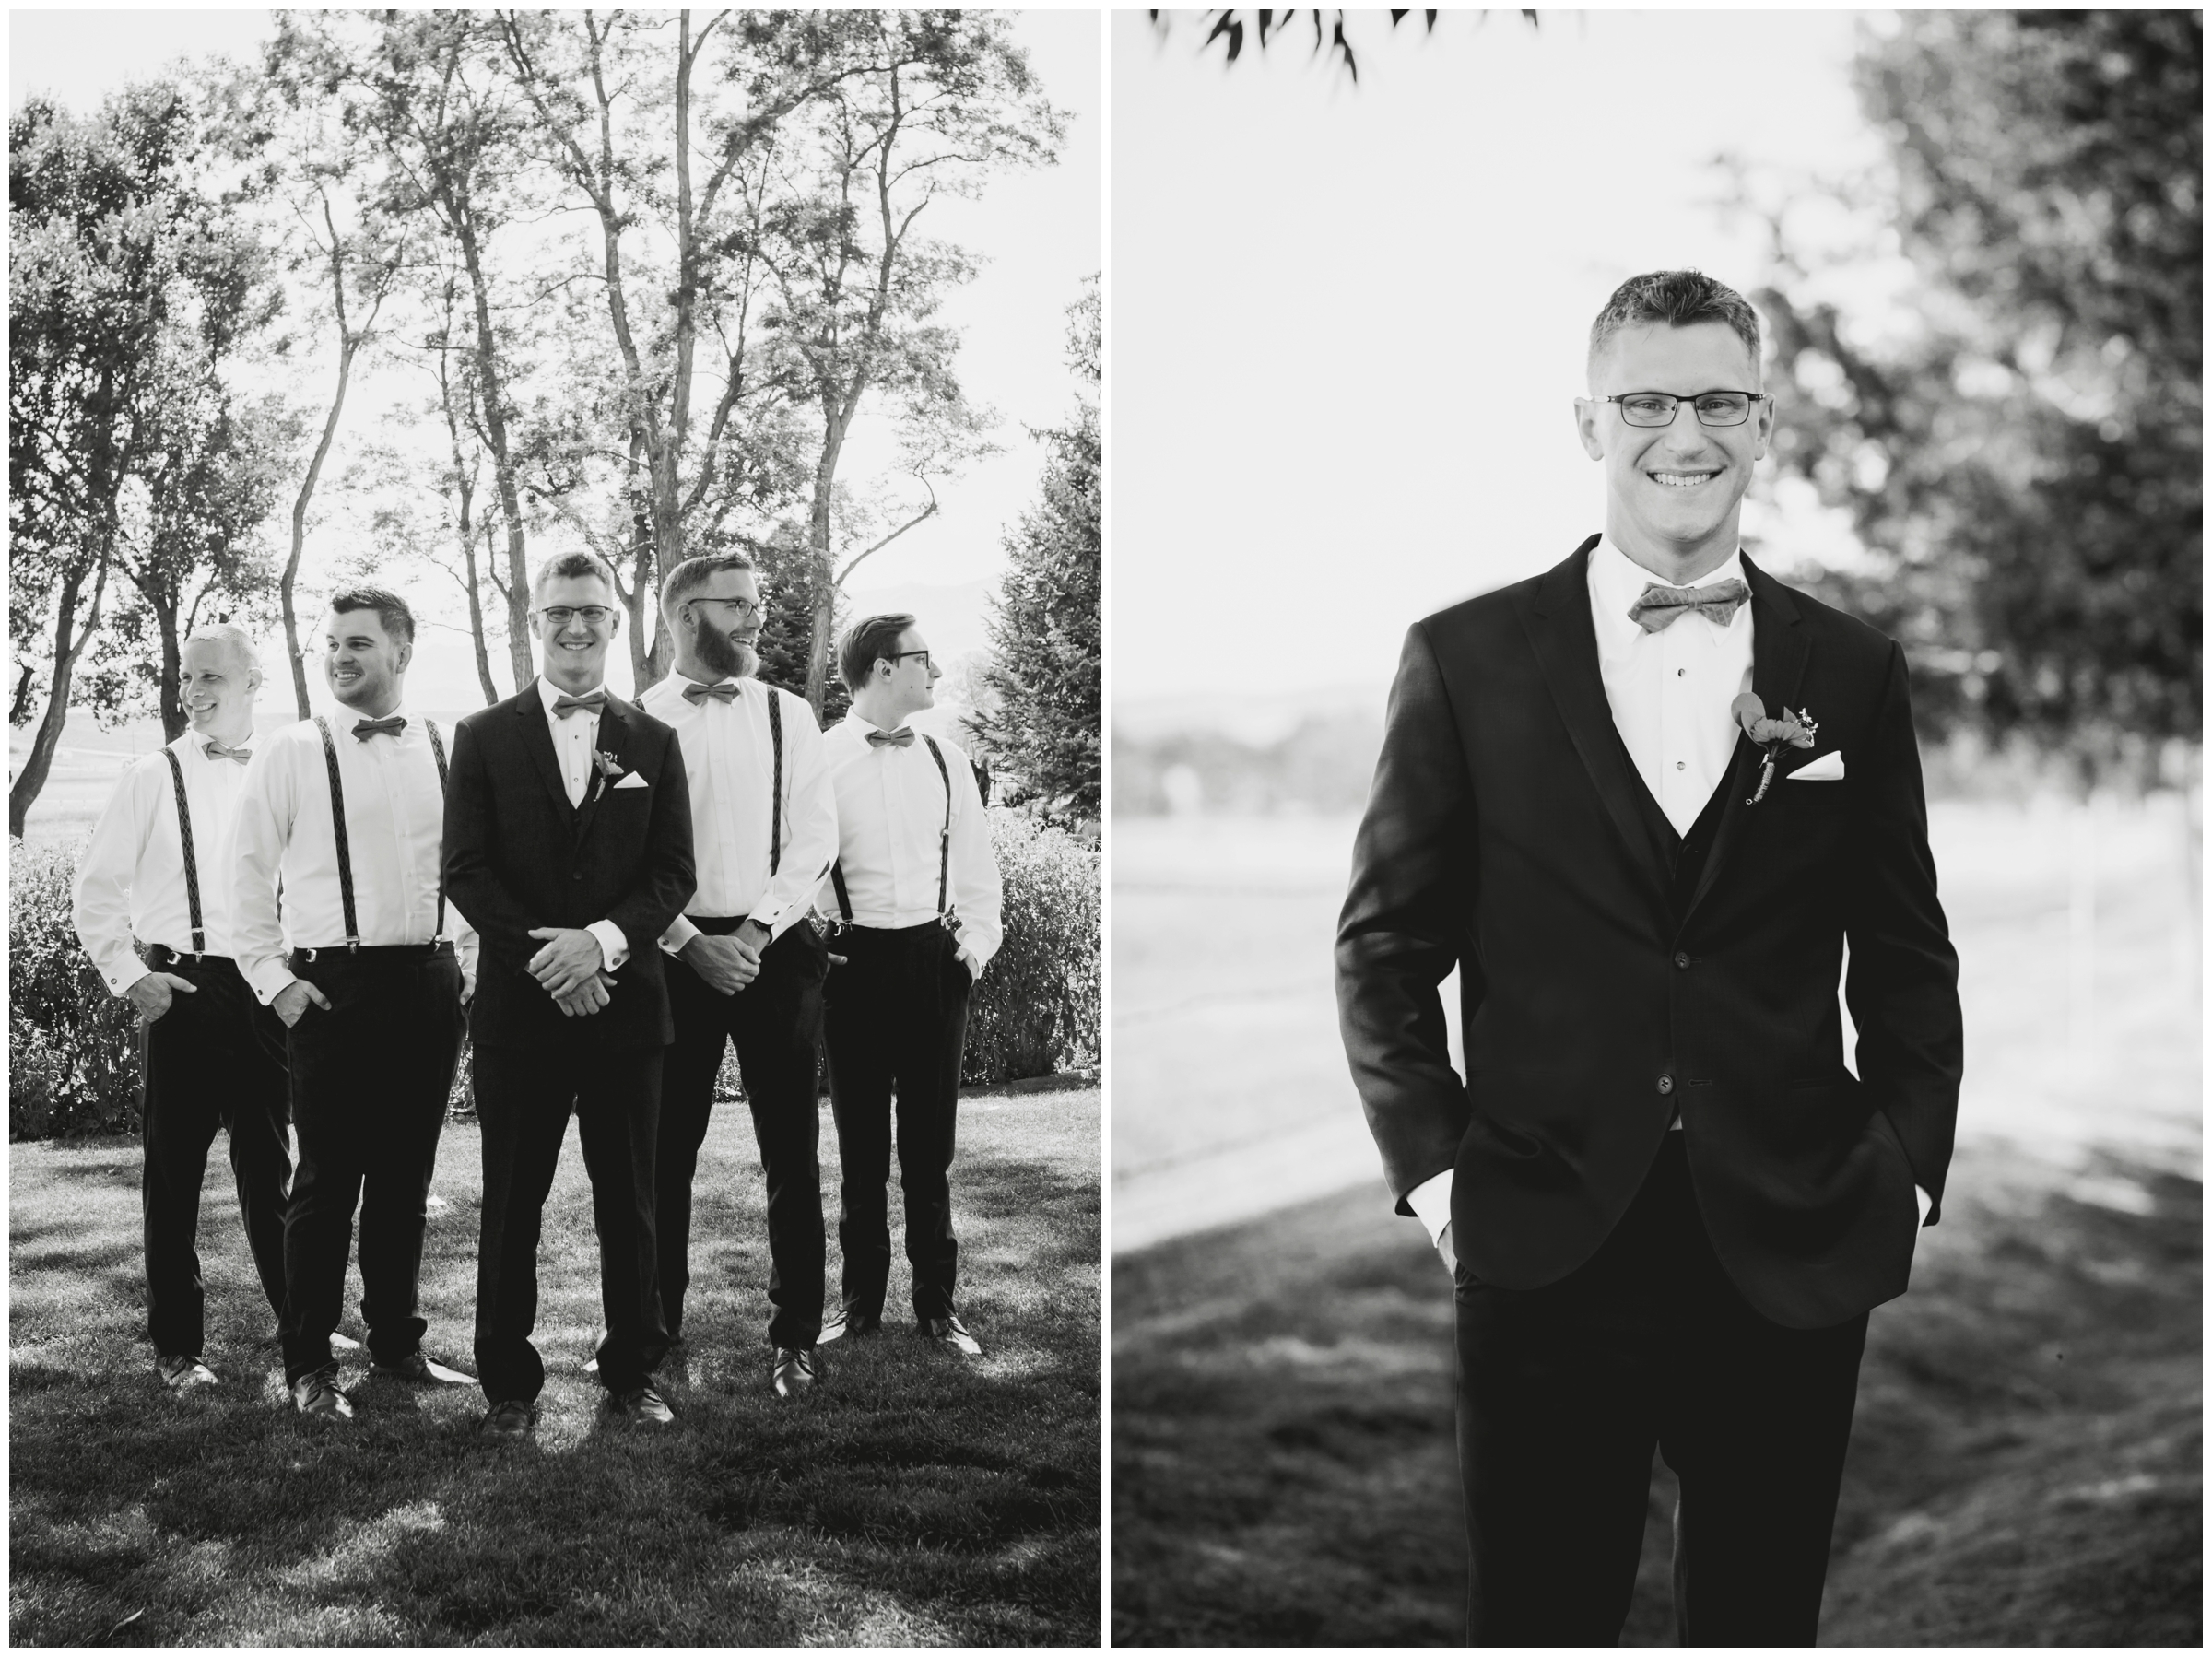 groomsmen attire inspiration with suspenders 